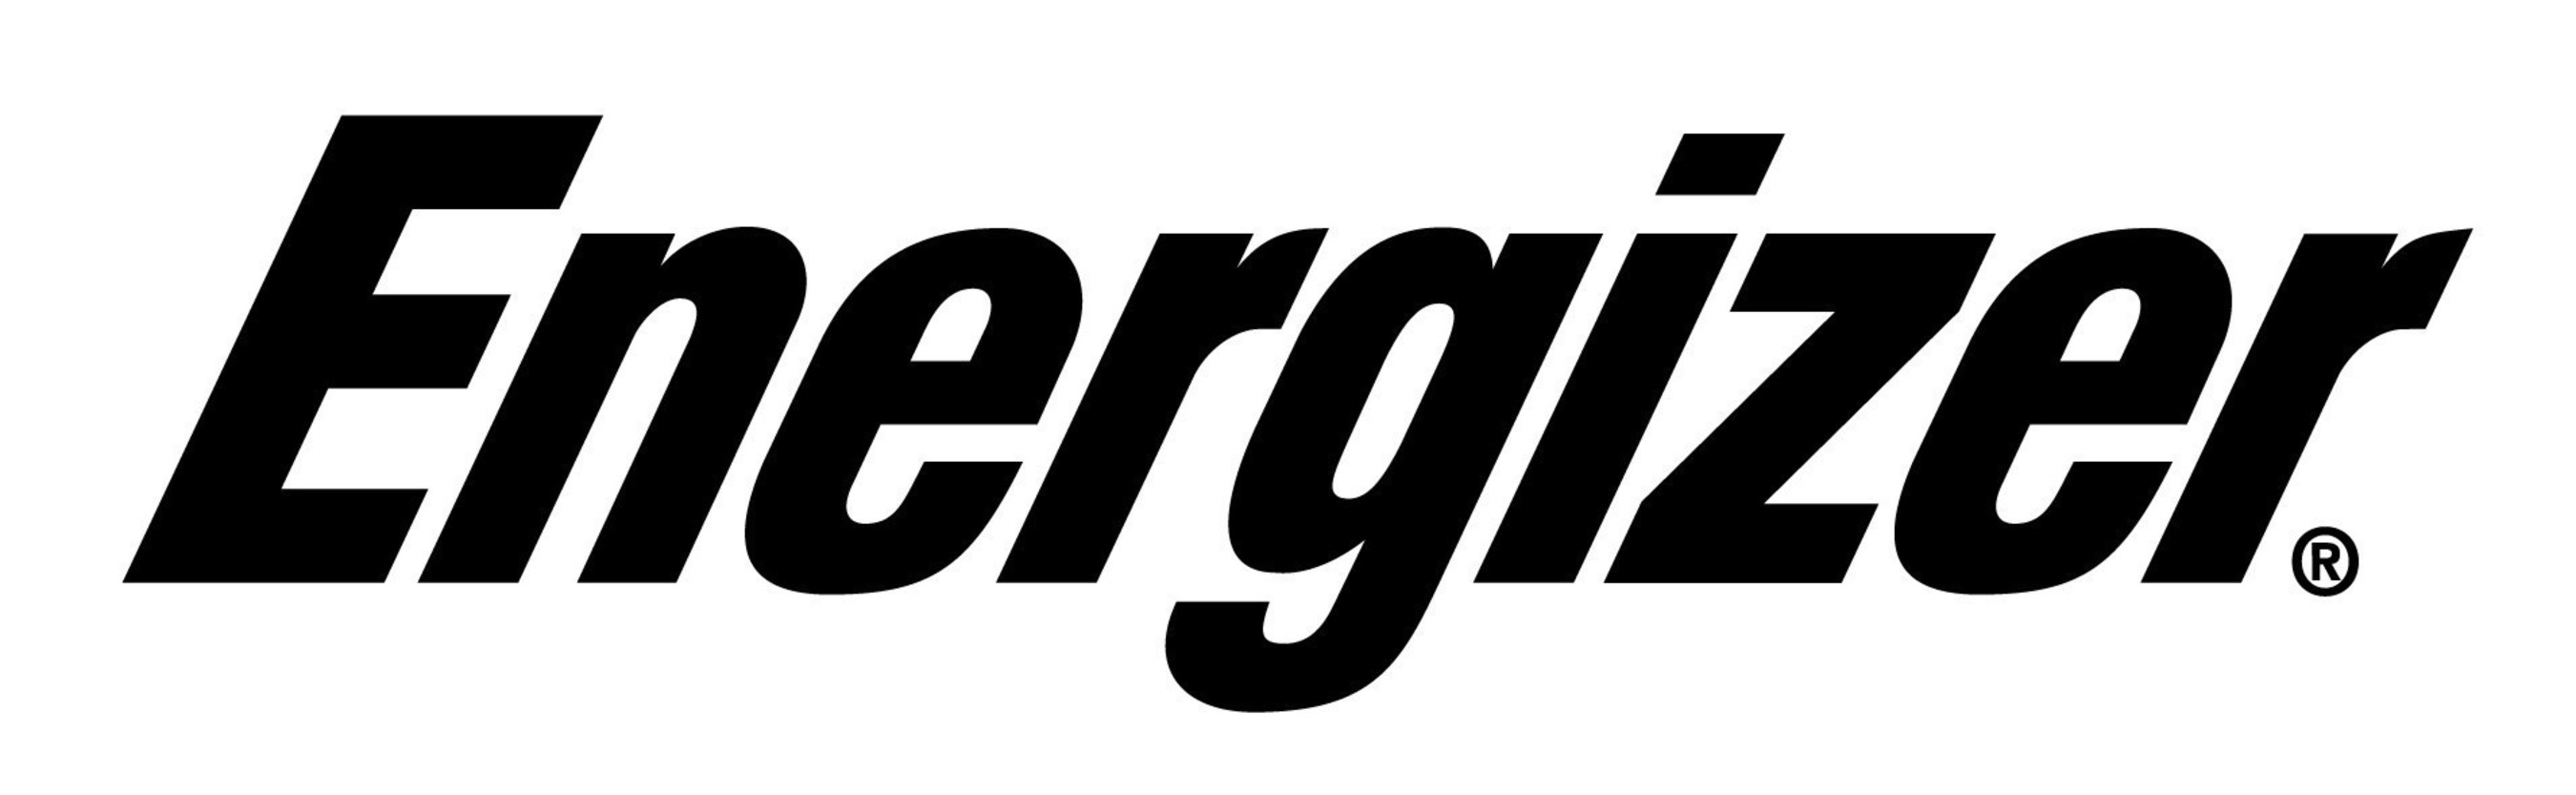 Energizer(R)